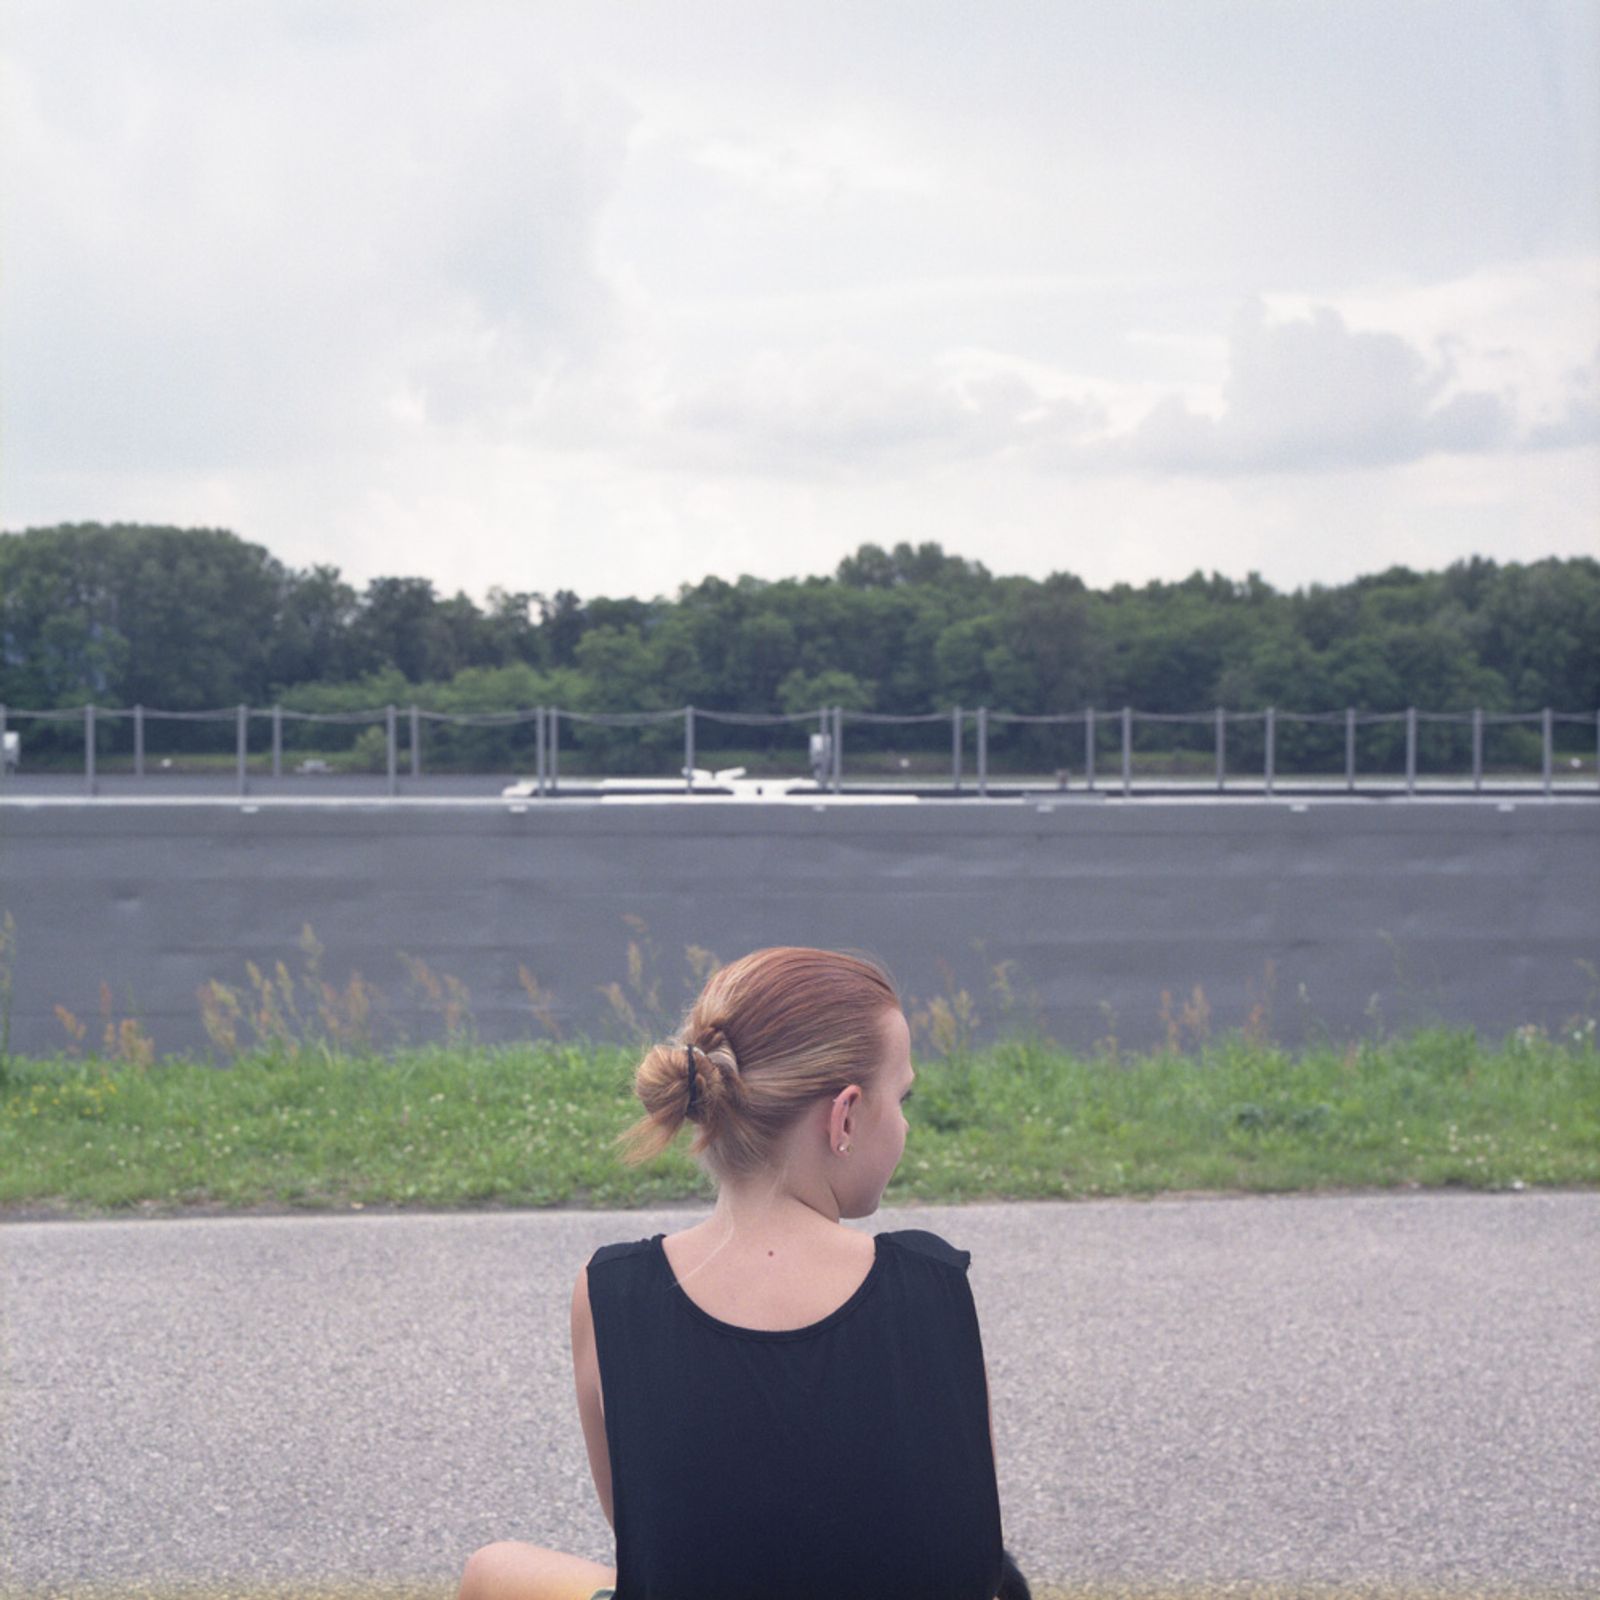 © Chiara Fossati - Maria, 16 years old, looking at the Danube river.